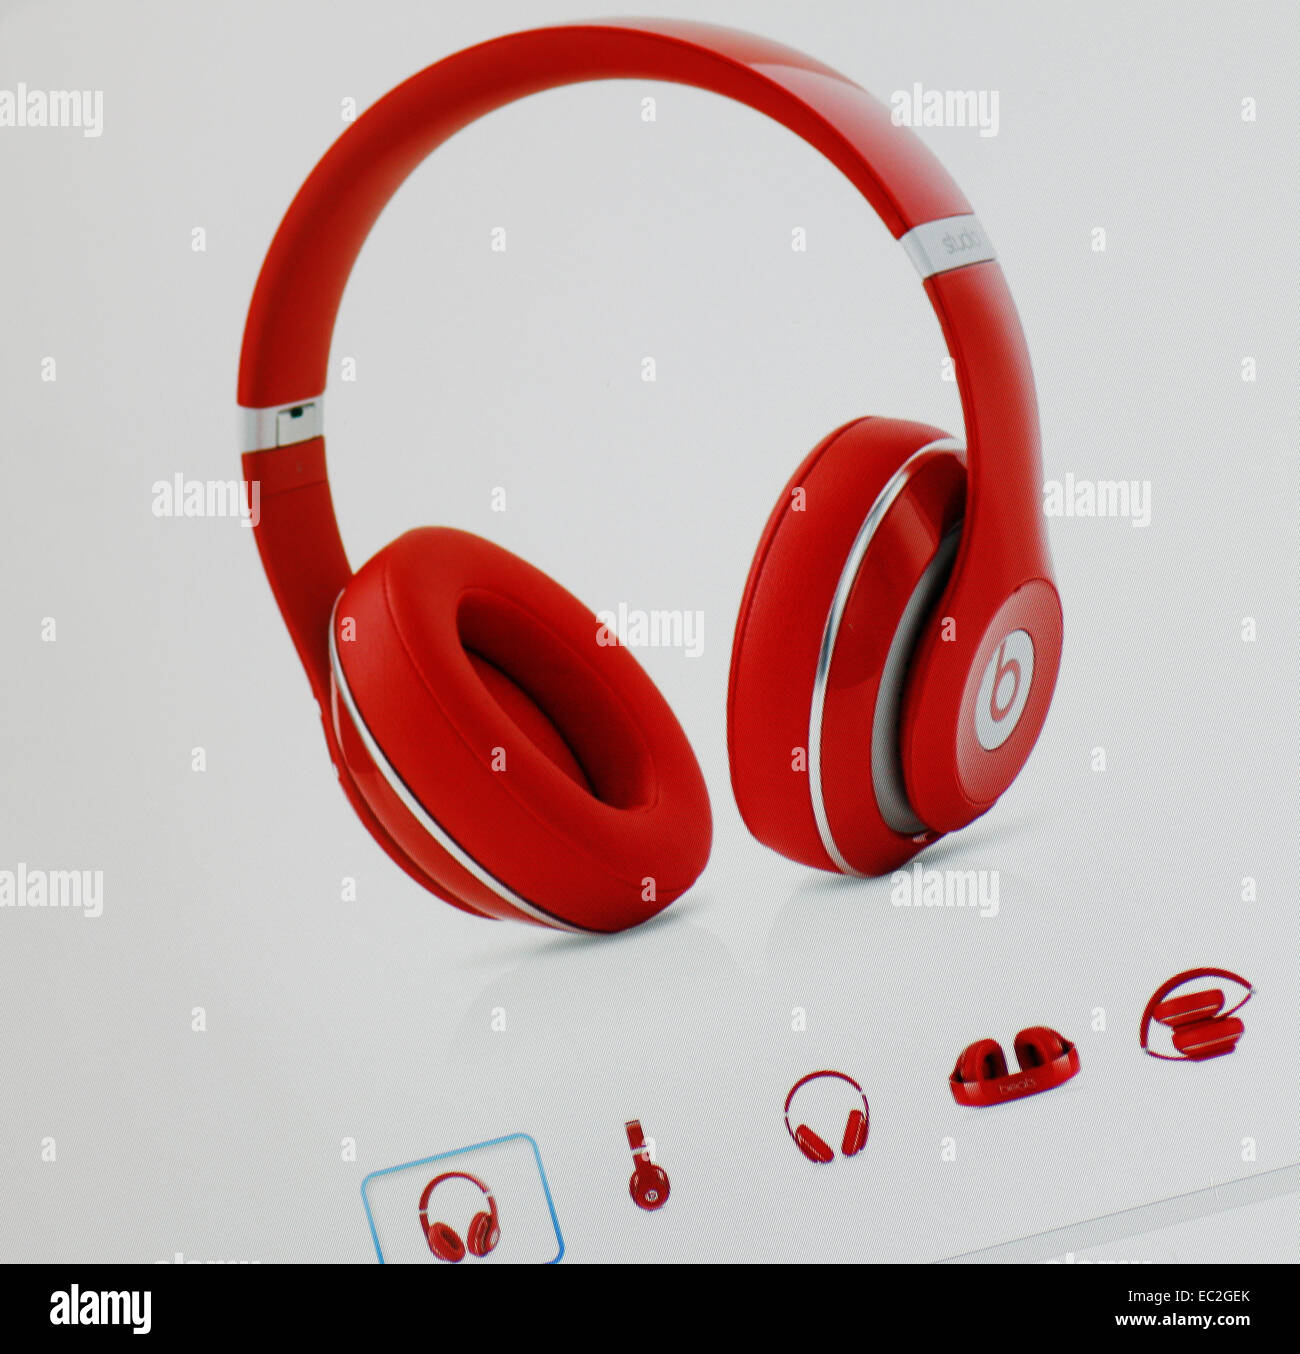 Headphones by Beats Electronics Photo -